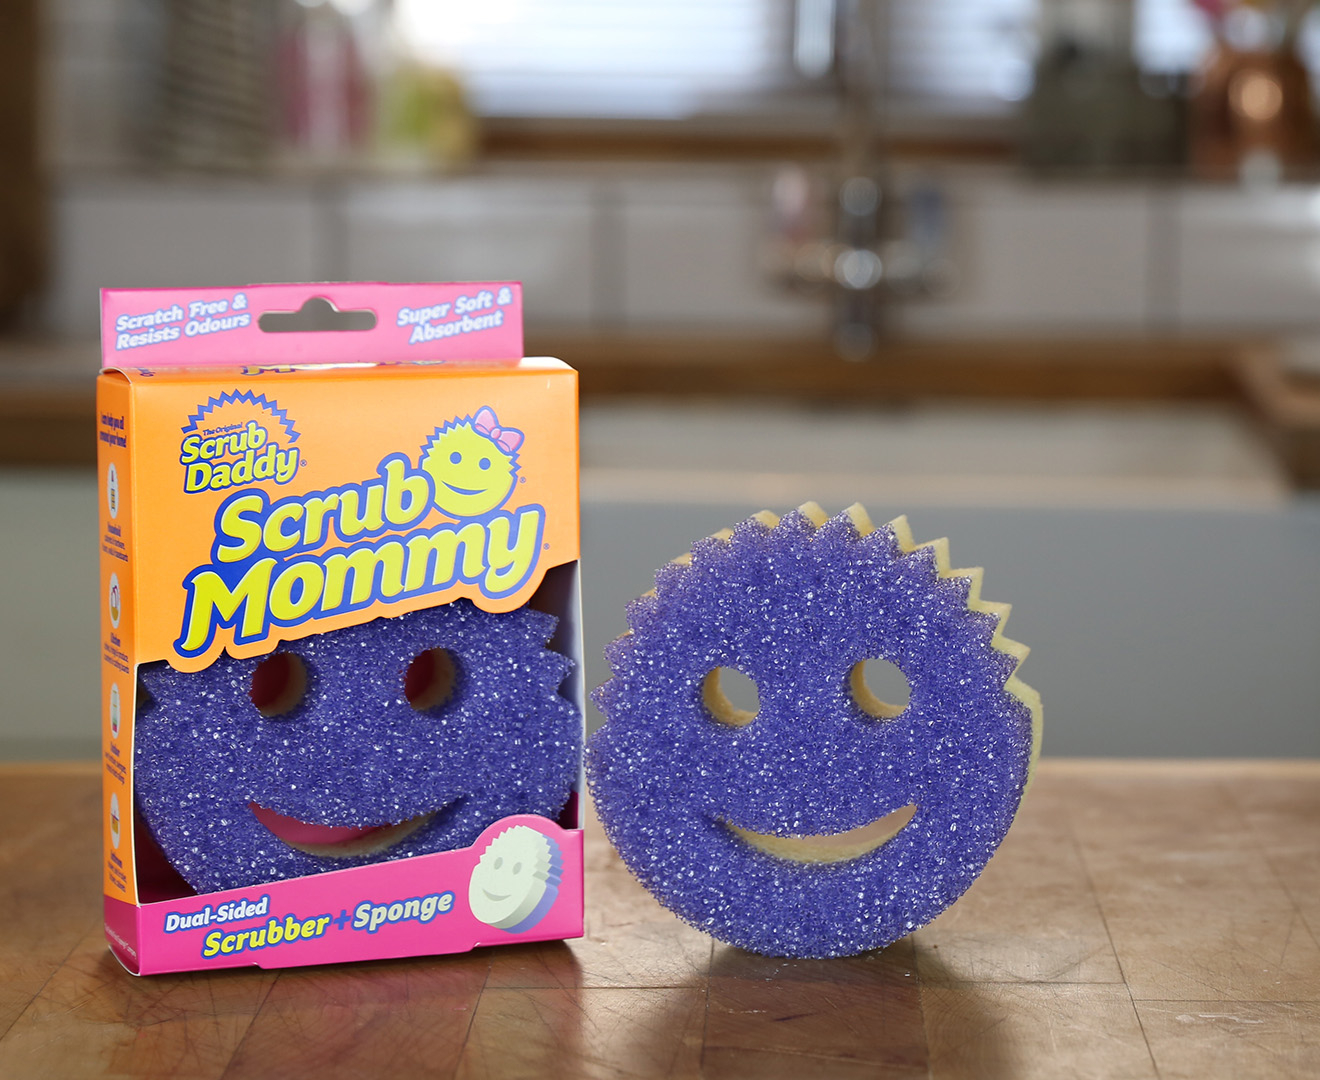 Scrub Mommy Dual Sided Purple Scrub Sponge, 1 ct - Kroger